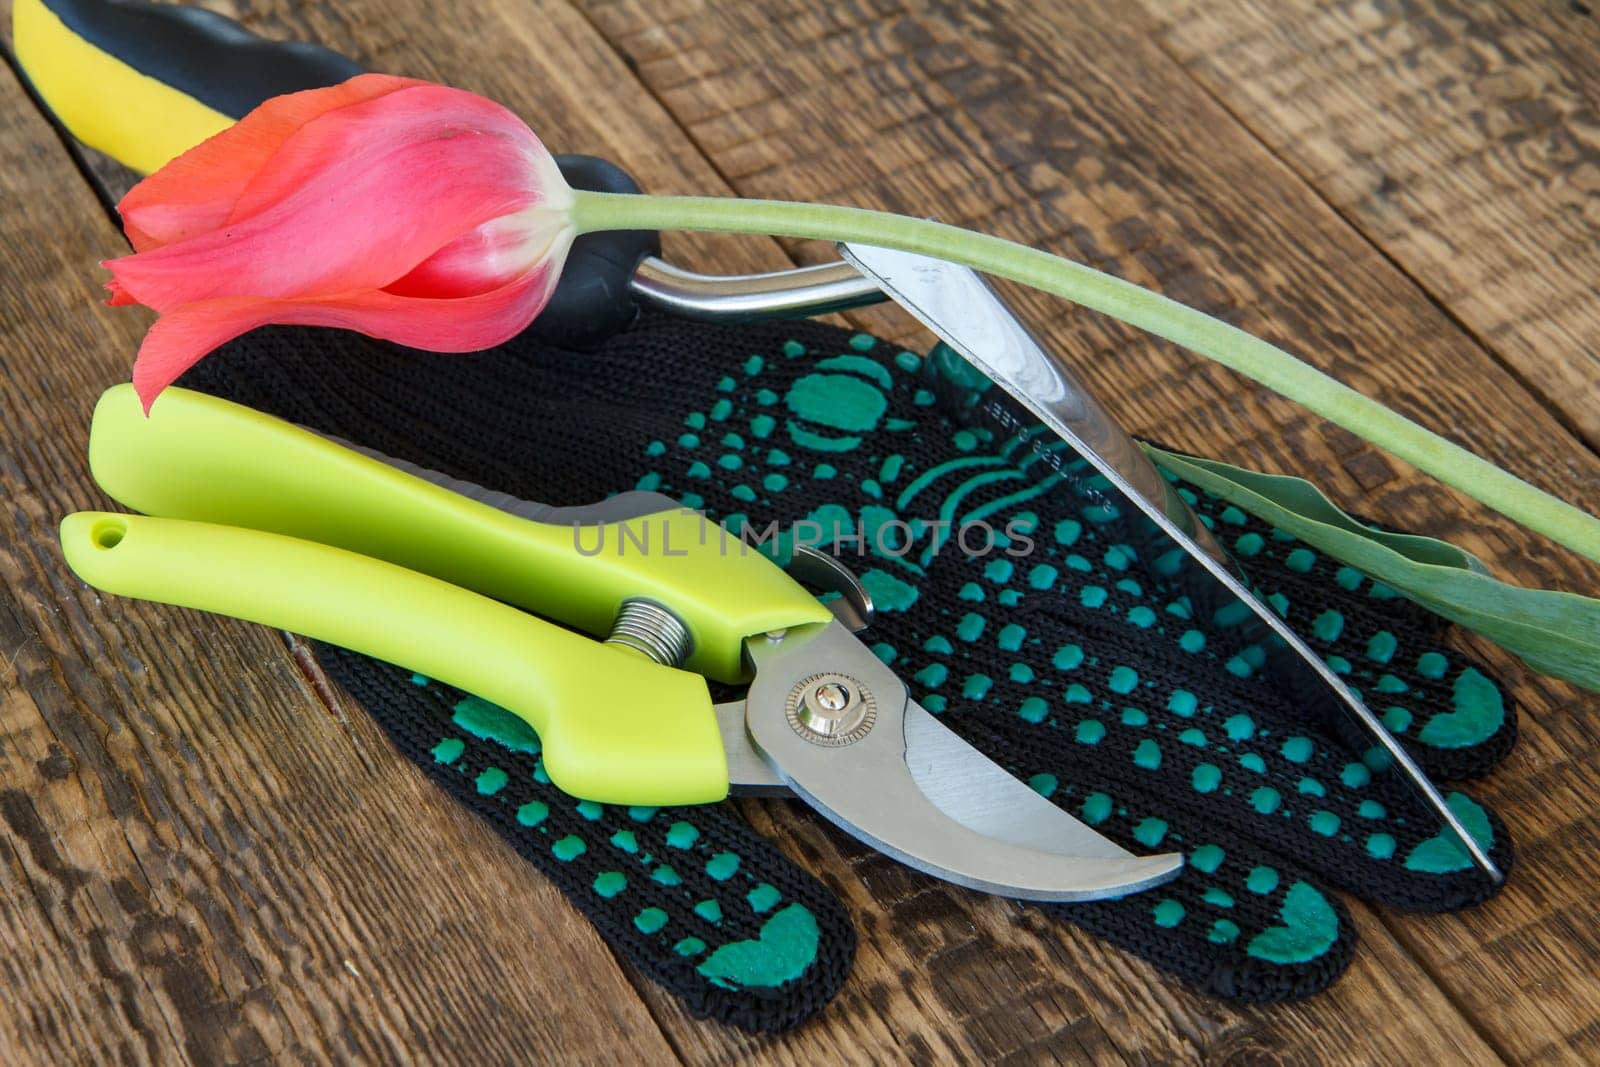 Garden glove, pruner, trowel and cut tulip on wooden boards. by mvg6894